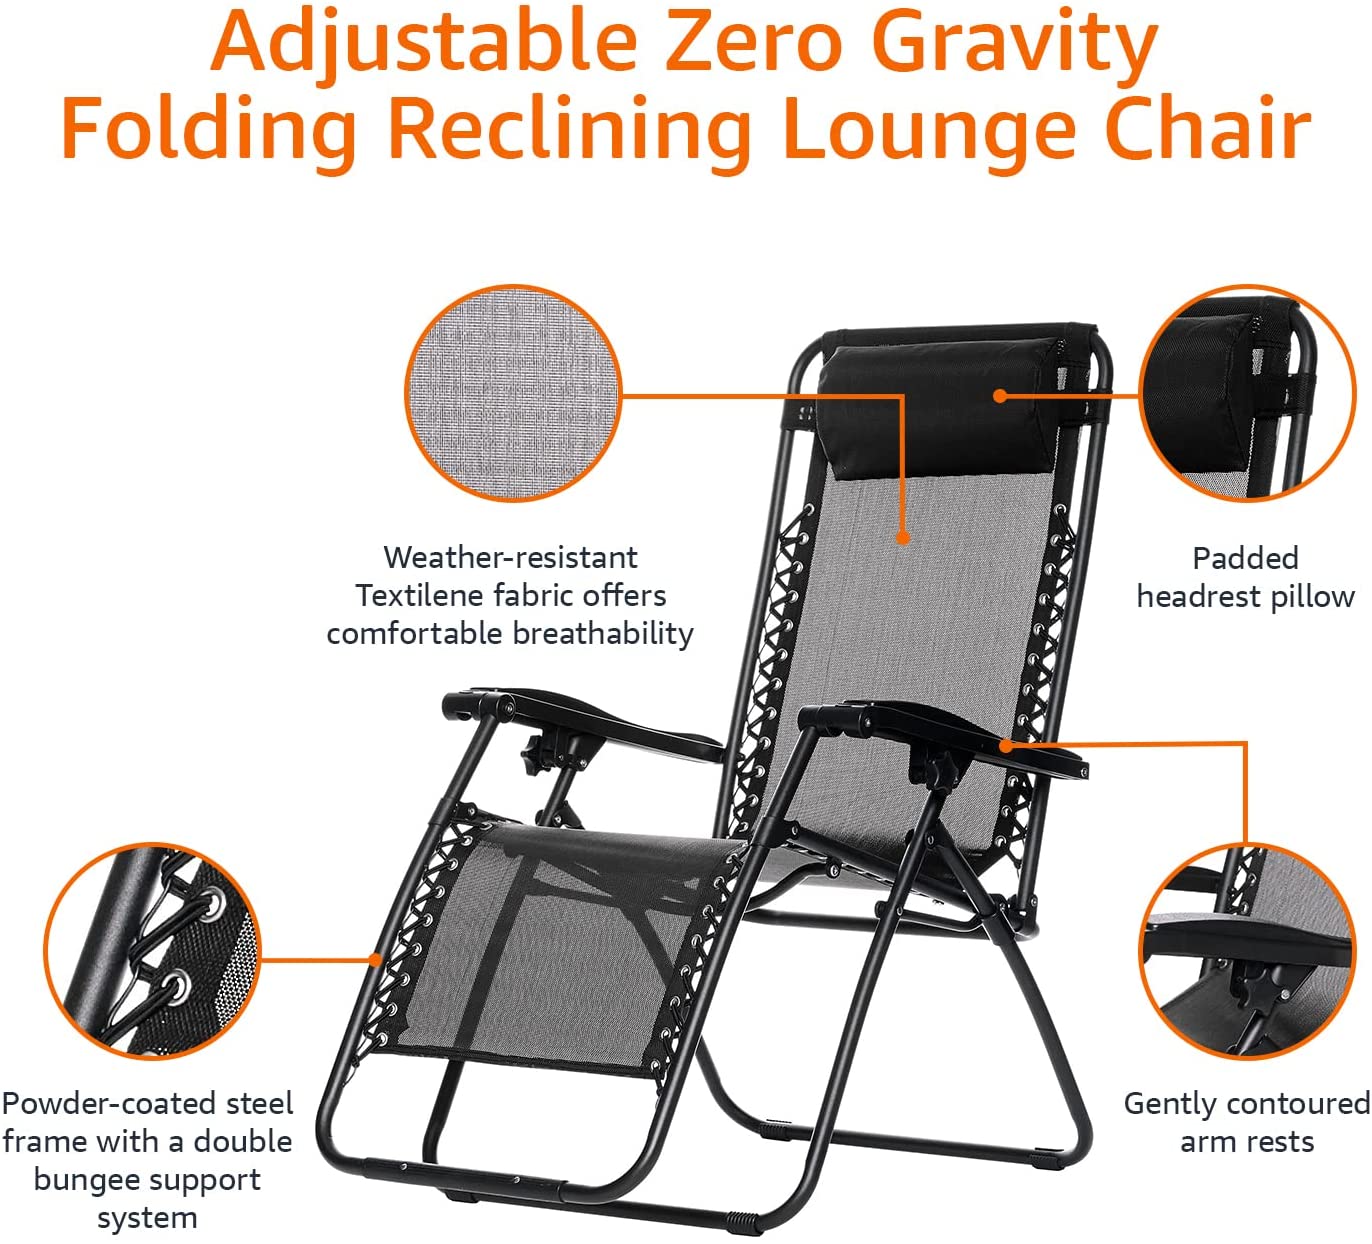 Dasar Outdoor Textilene Adjustable Zero Gravity Folding Reclining Lounge Chair karo Bantal Black